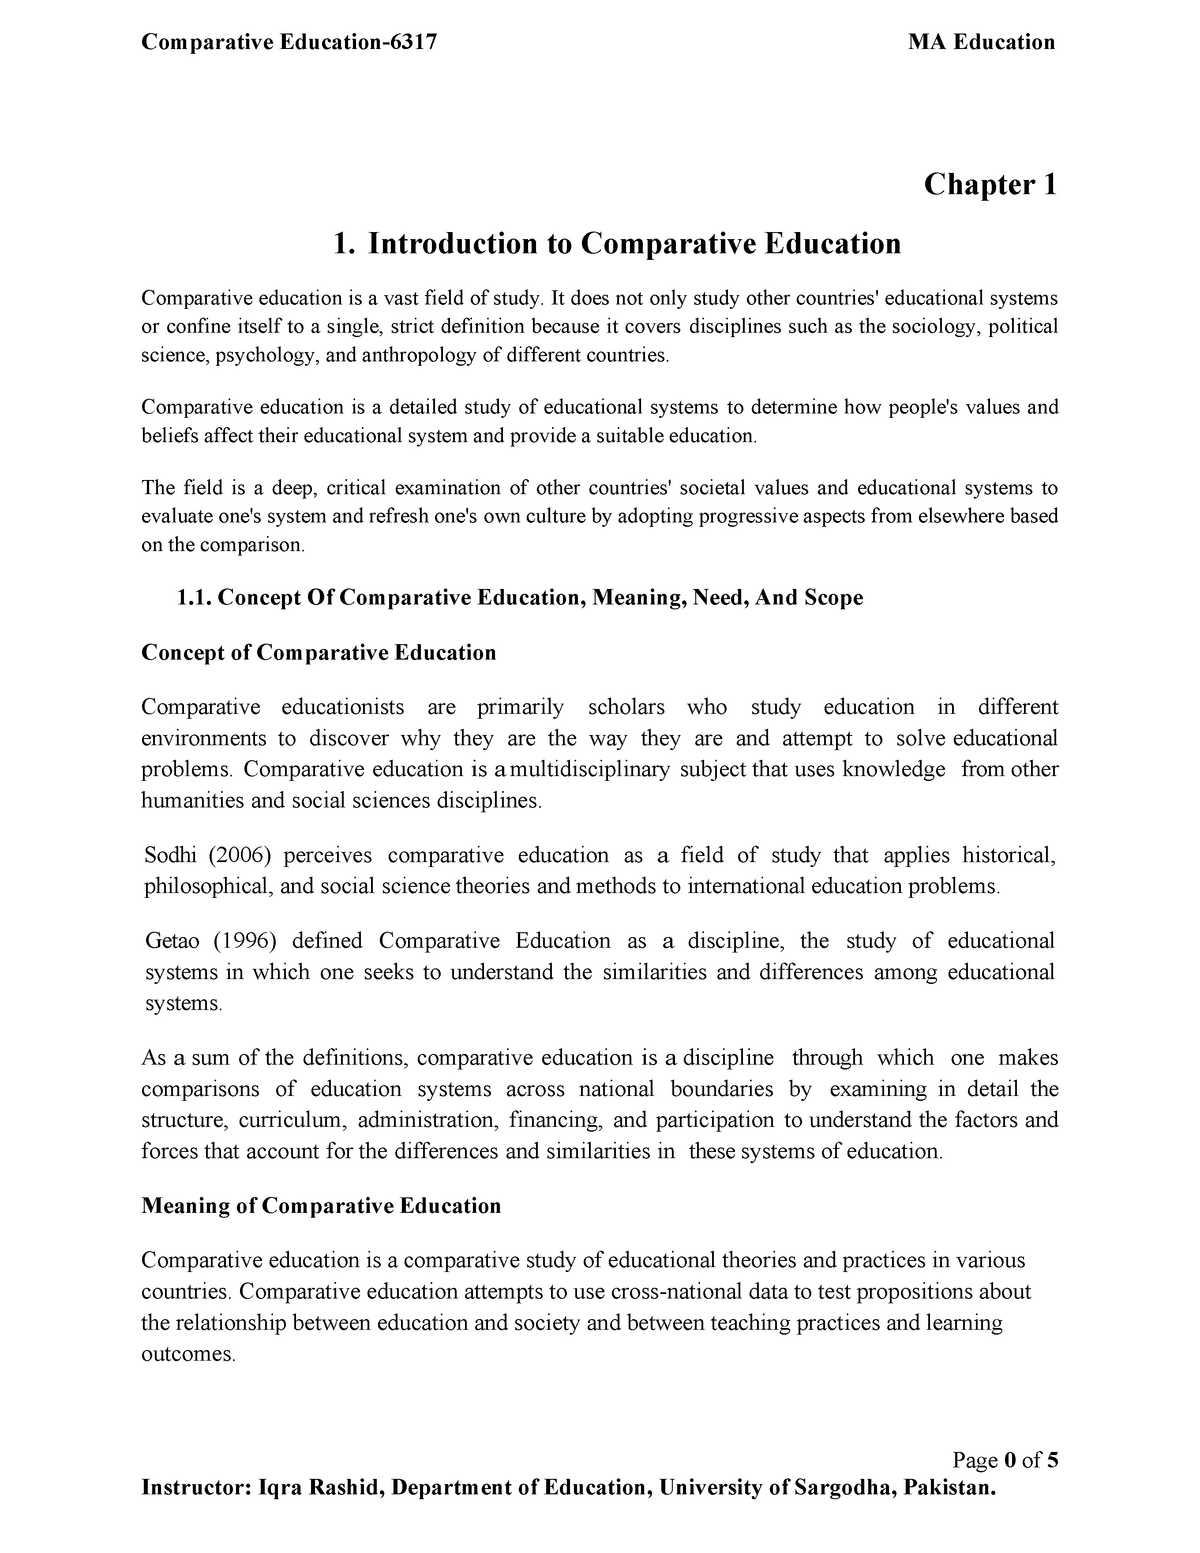 comparative education essay